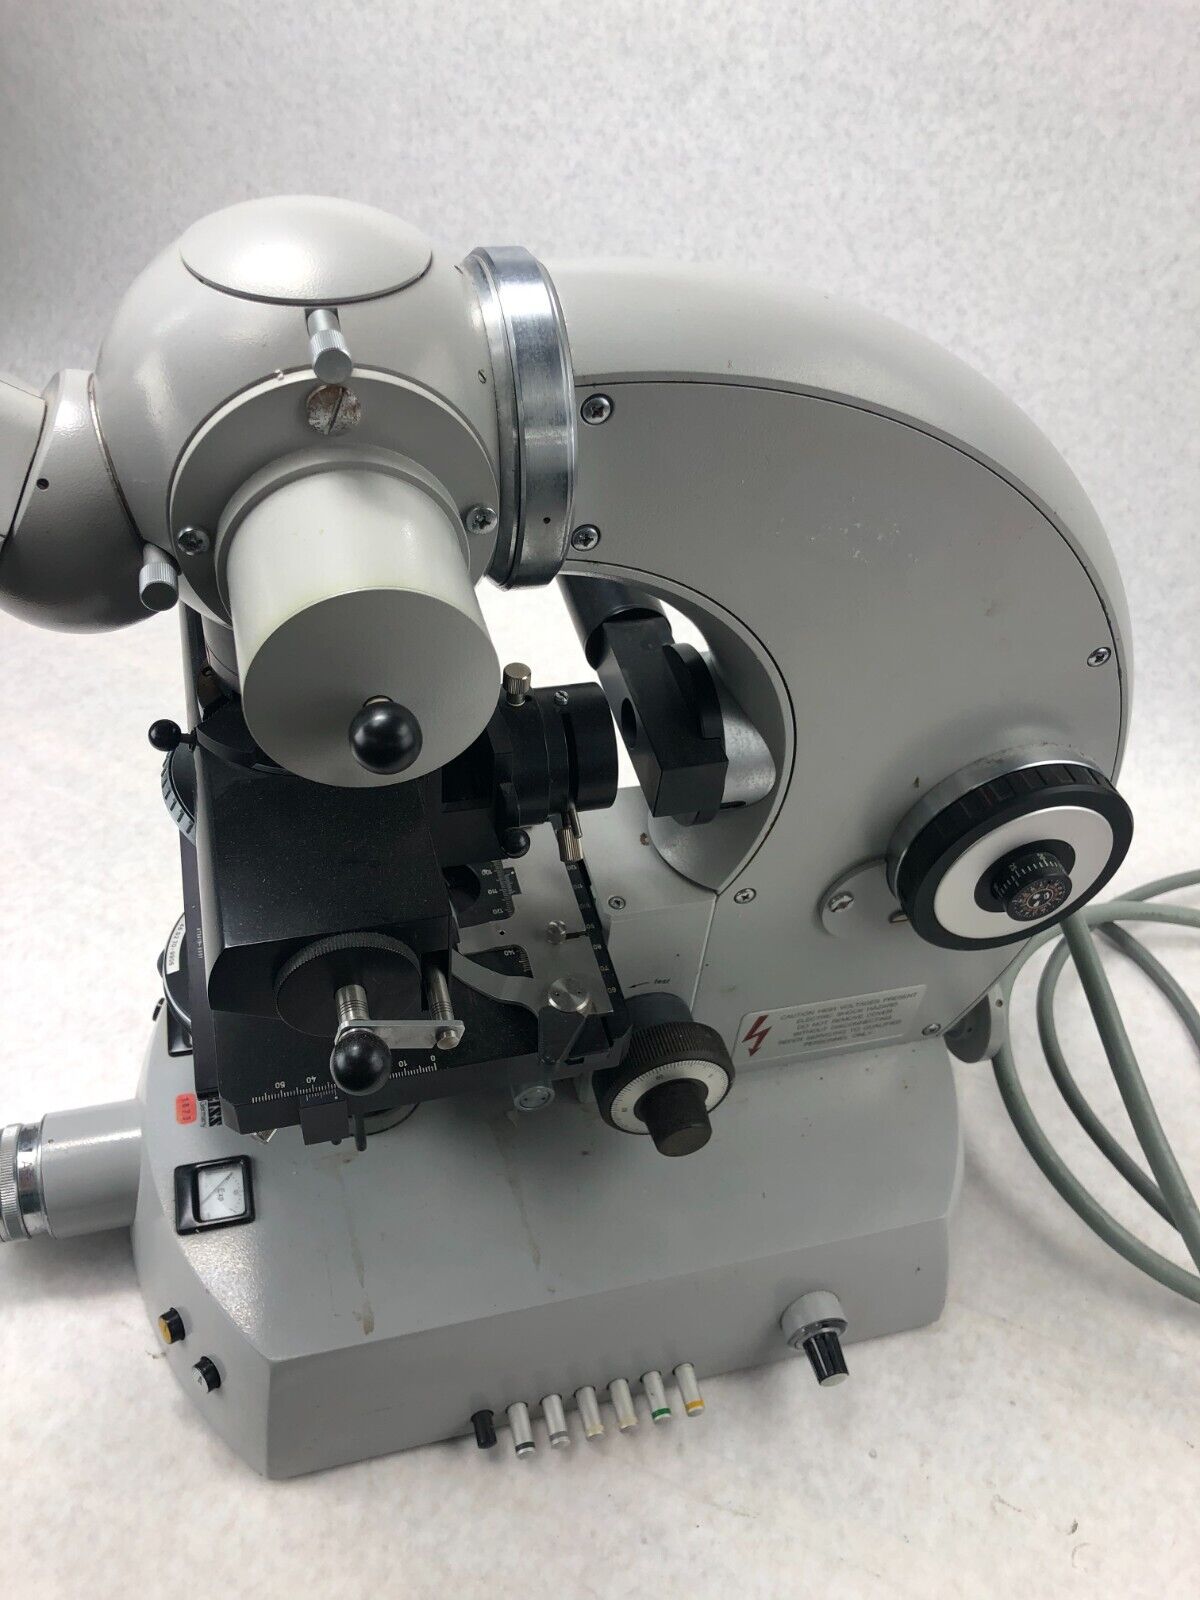 Carl Zeiss 472190-0000/14 Microscope Vorsicht III RS Germany